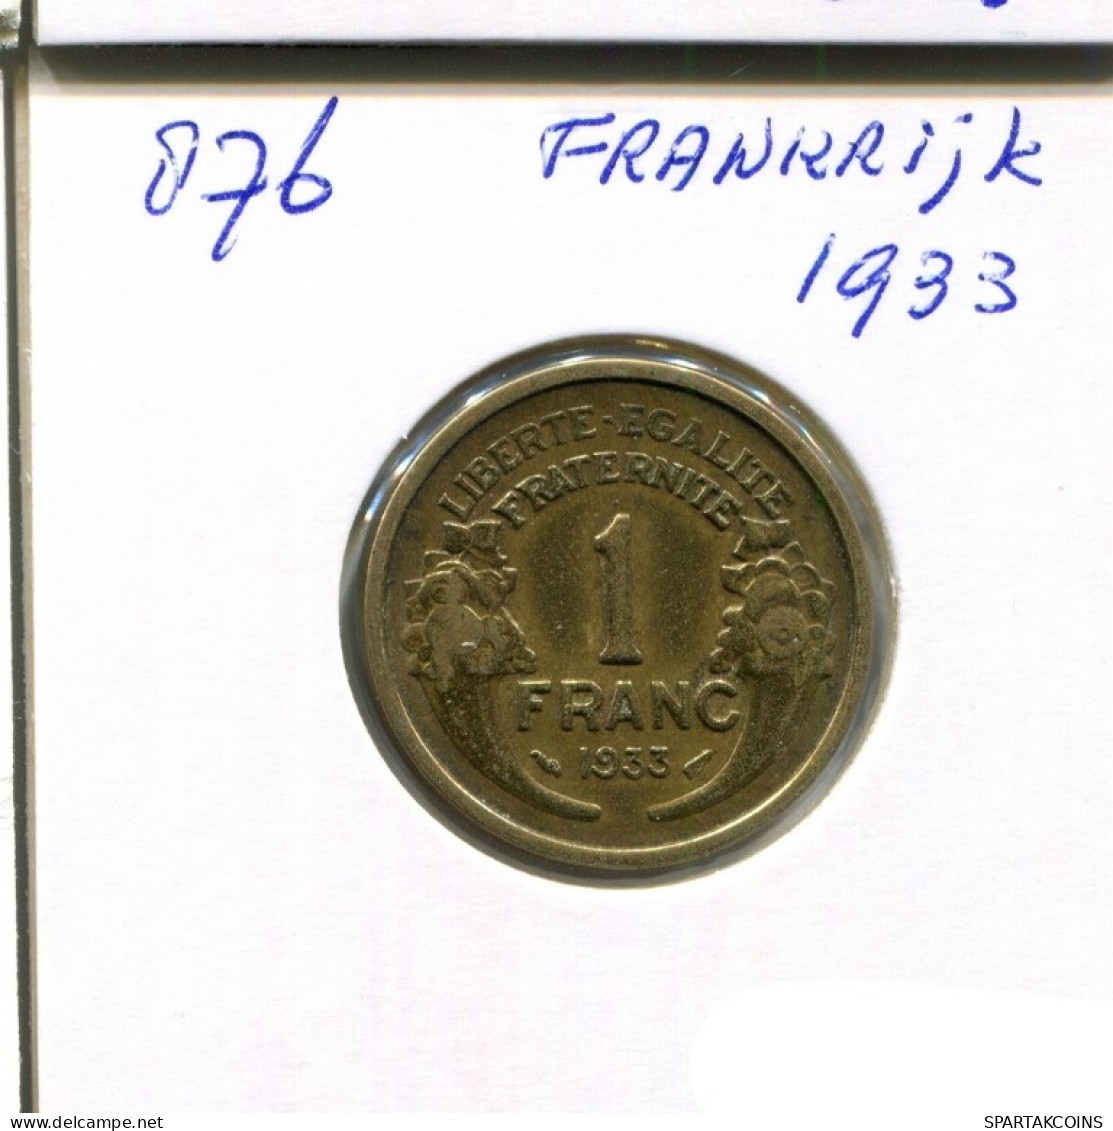 1 FRANC 1933 FRANCE Coin French Coin #AN268.U.A - 1 Franc